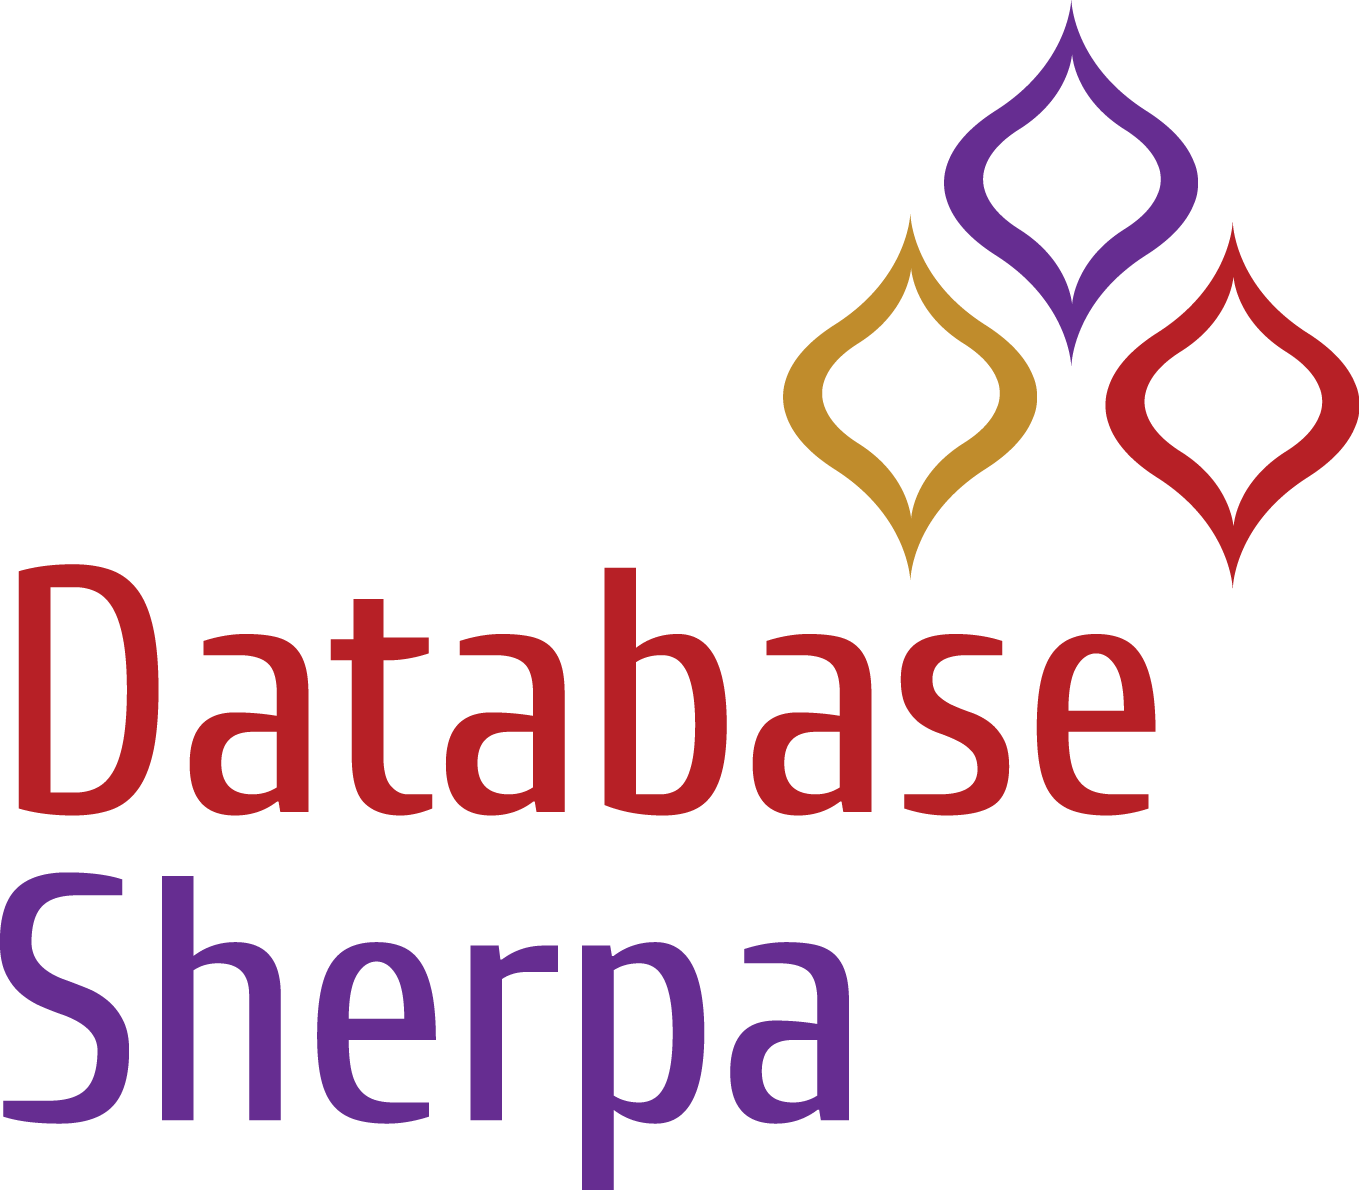 Database Sherpa